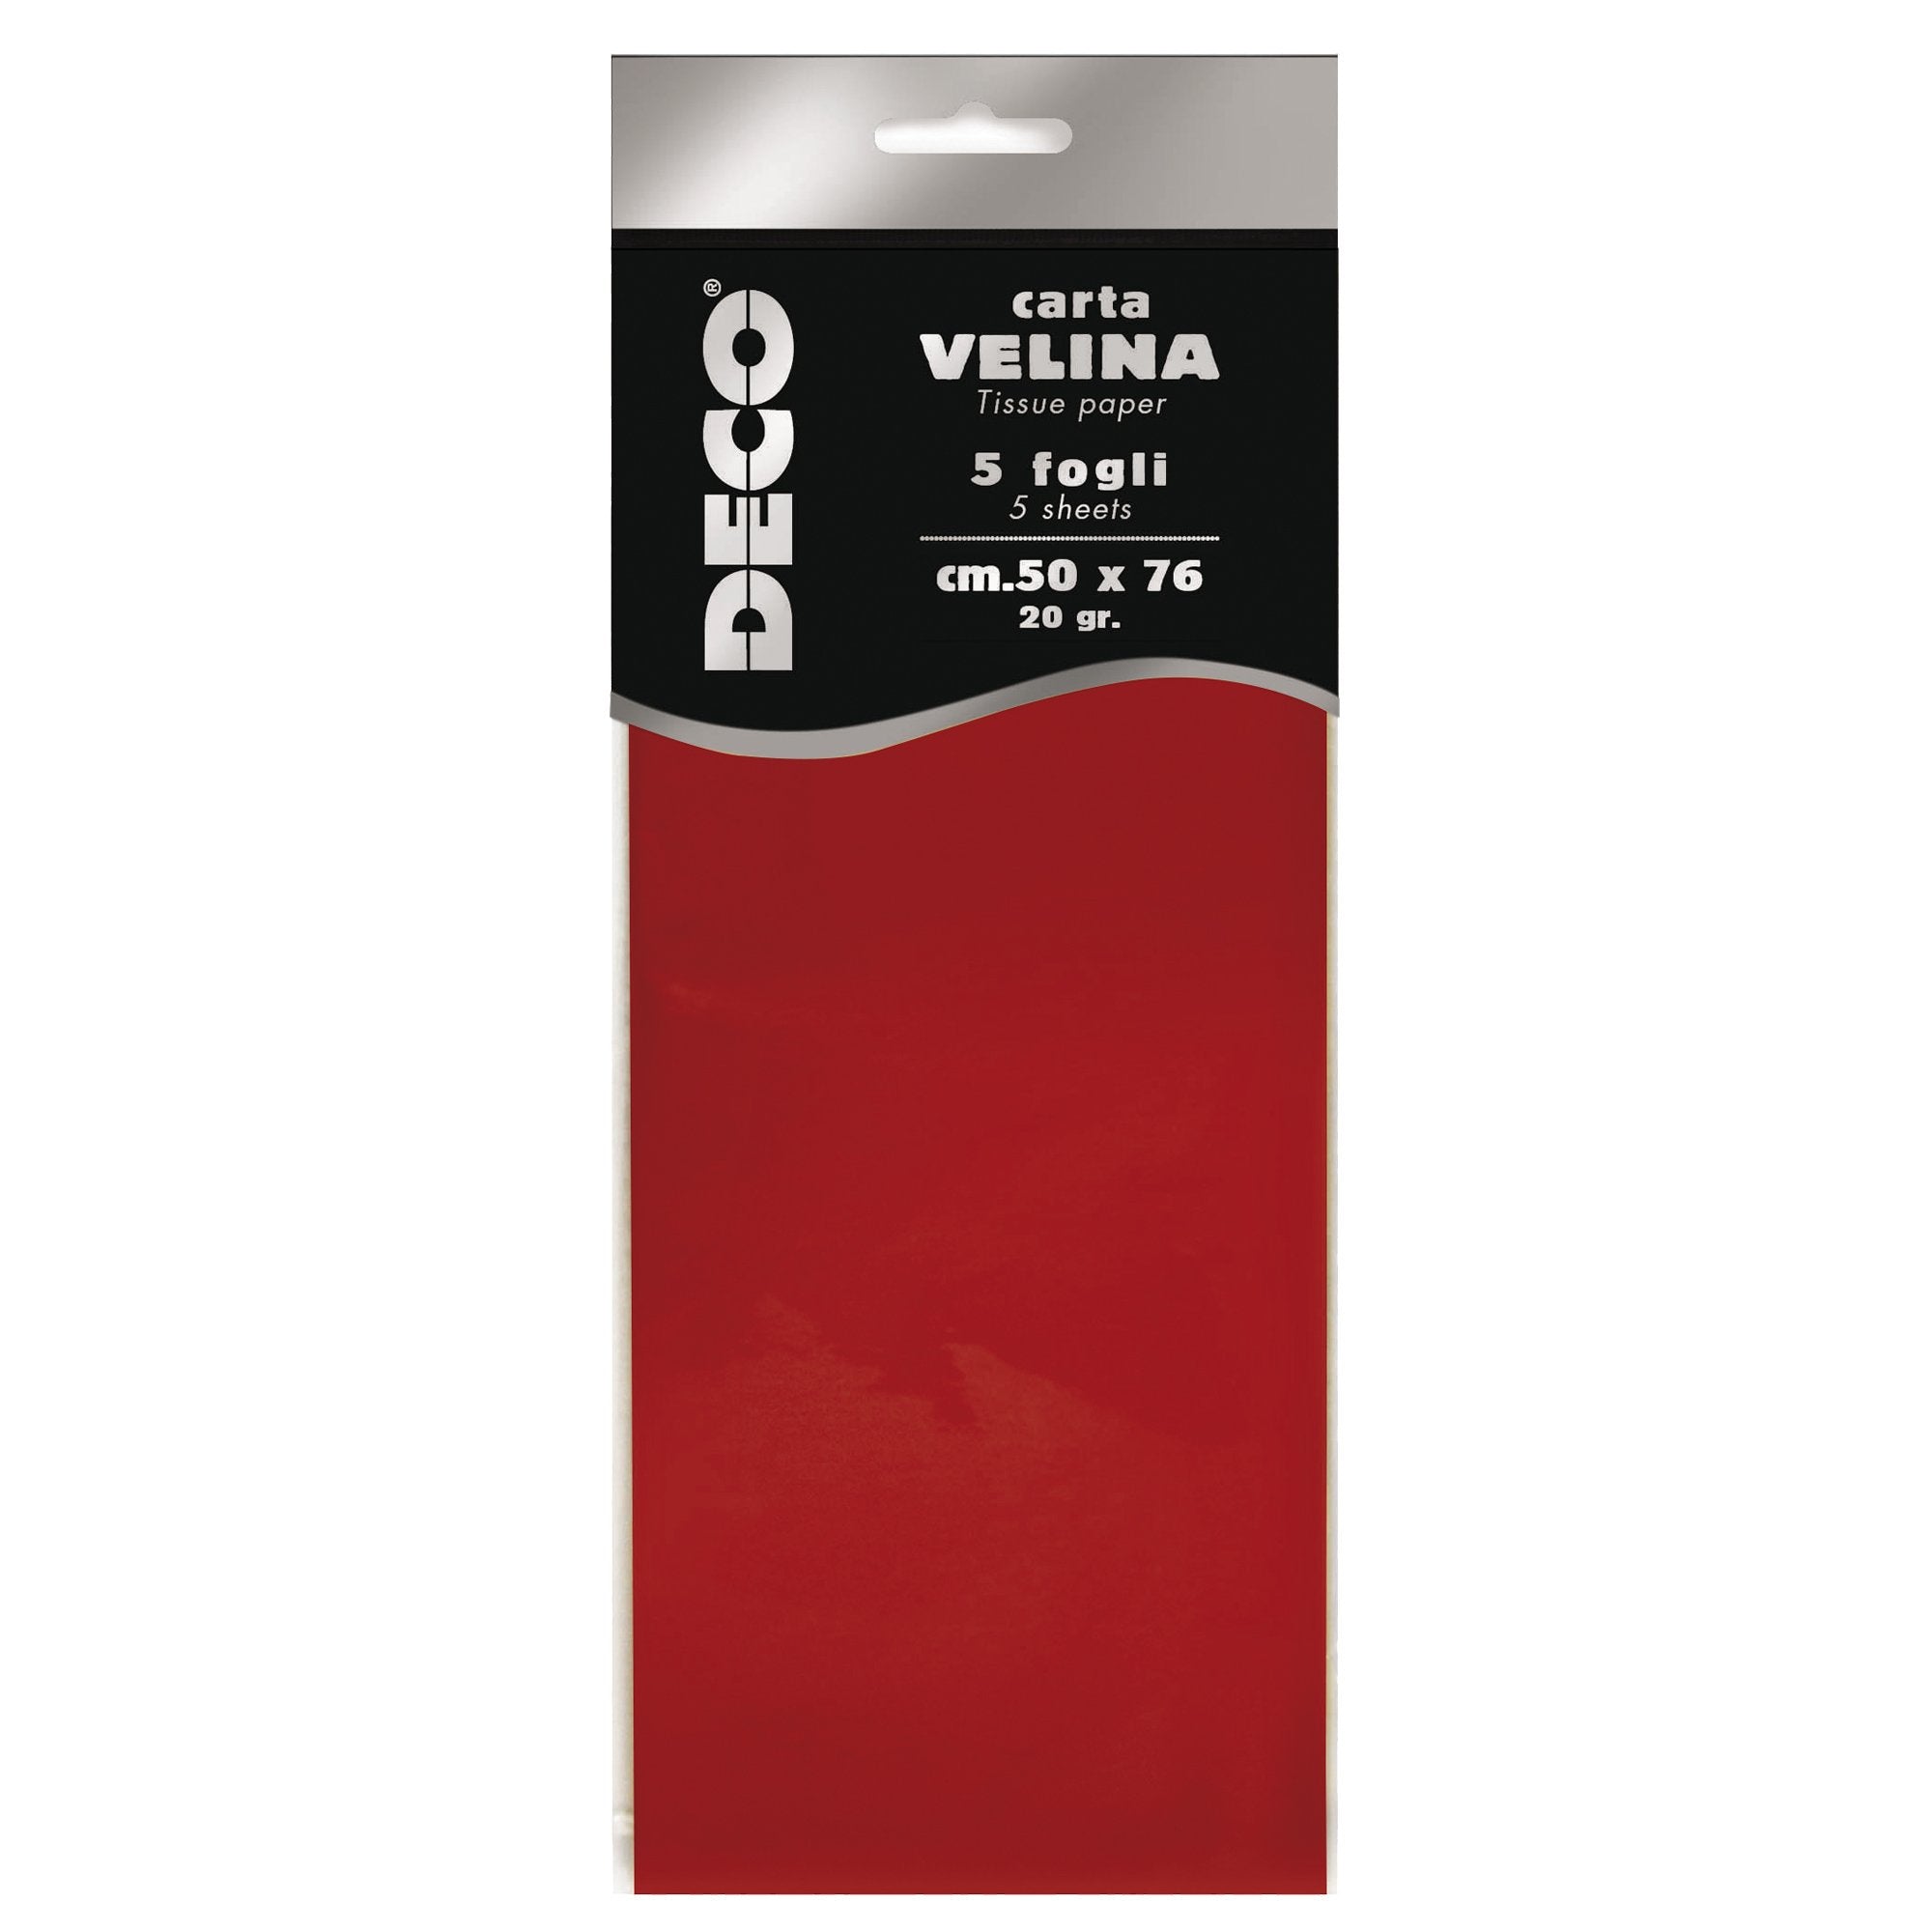 deco-busta-5-fogli-carta-velina-20gr-50x76cm-rosso